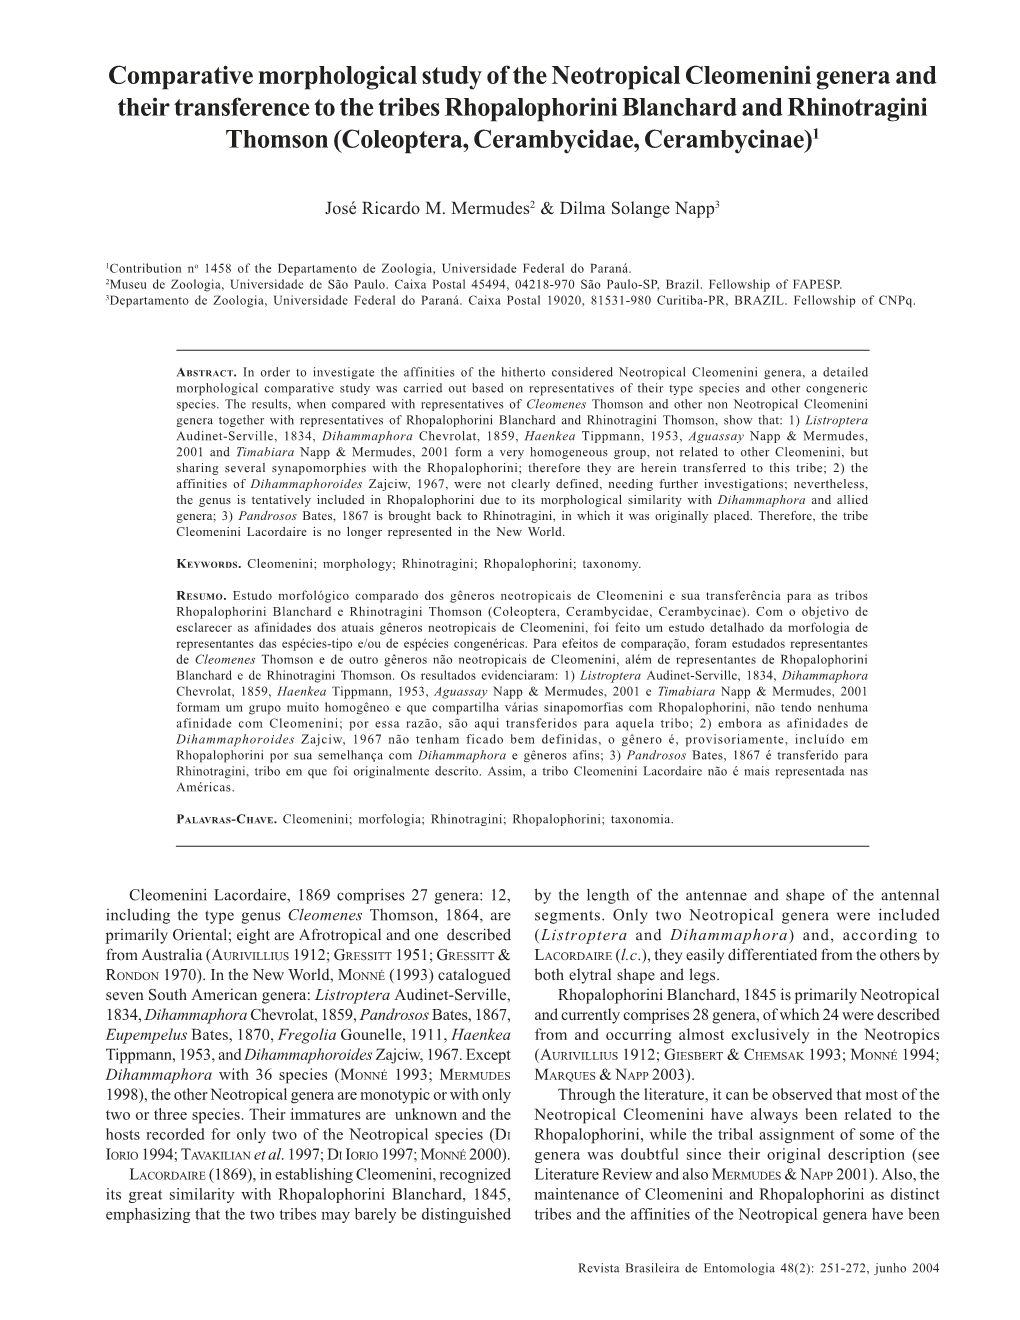 Comparative Morphological Study of the Neotropical Cleomenini Genera 253